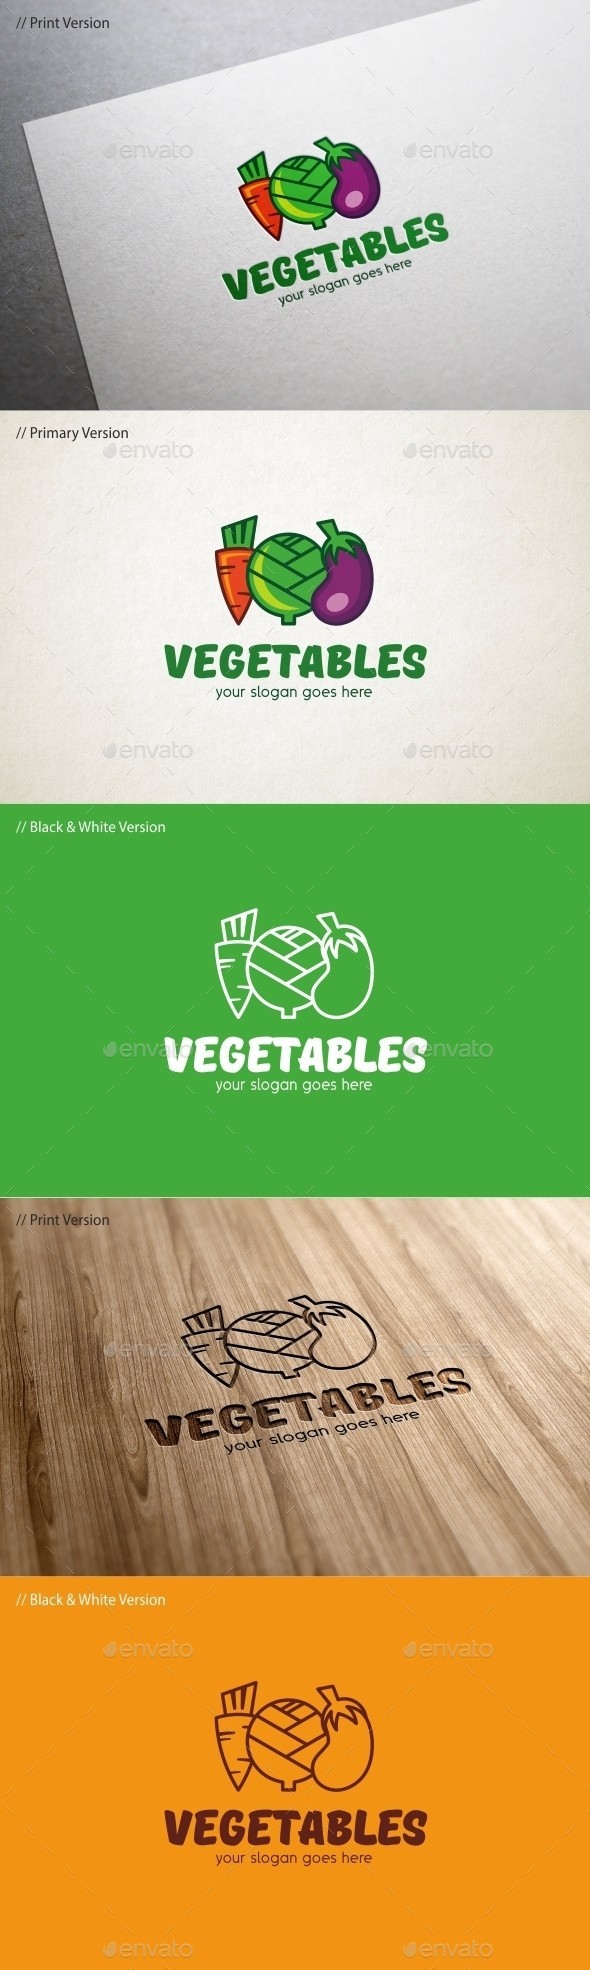 Vegetables 20logo 20template 20590